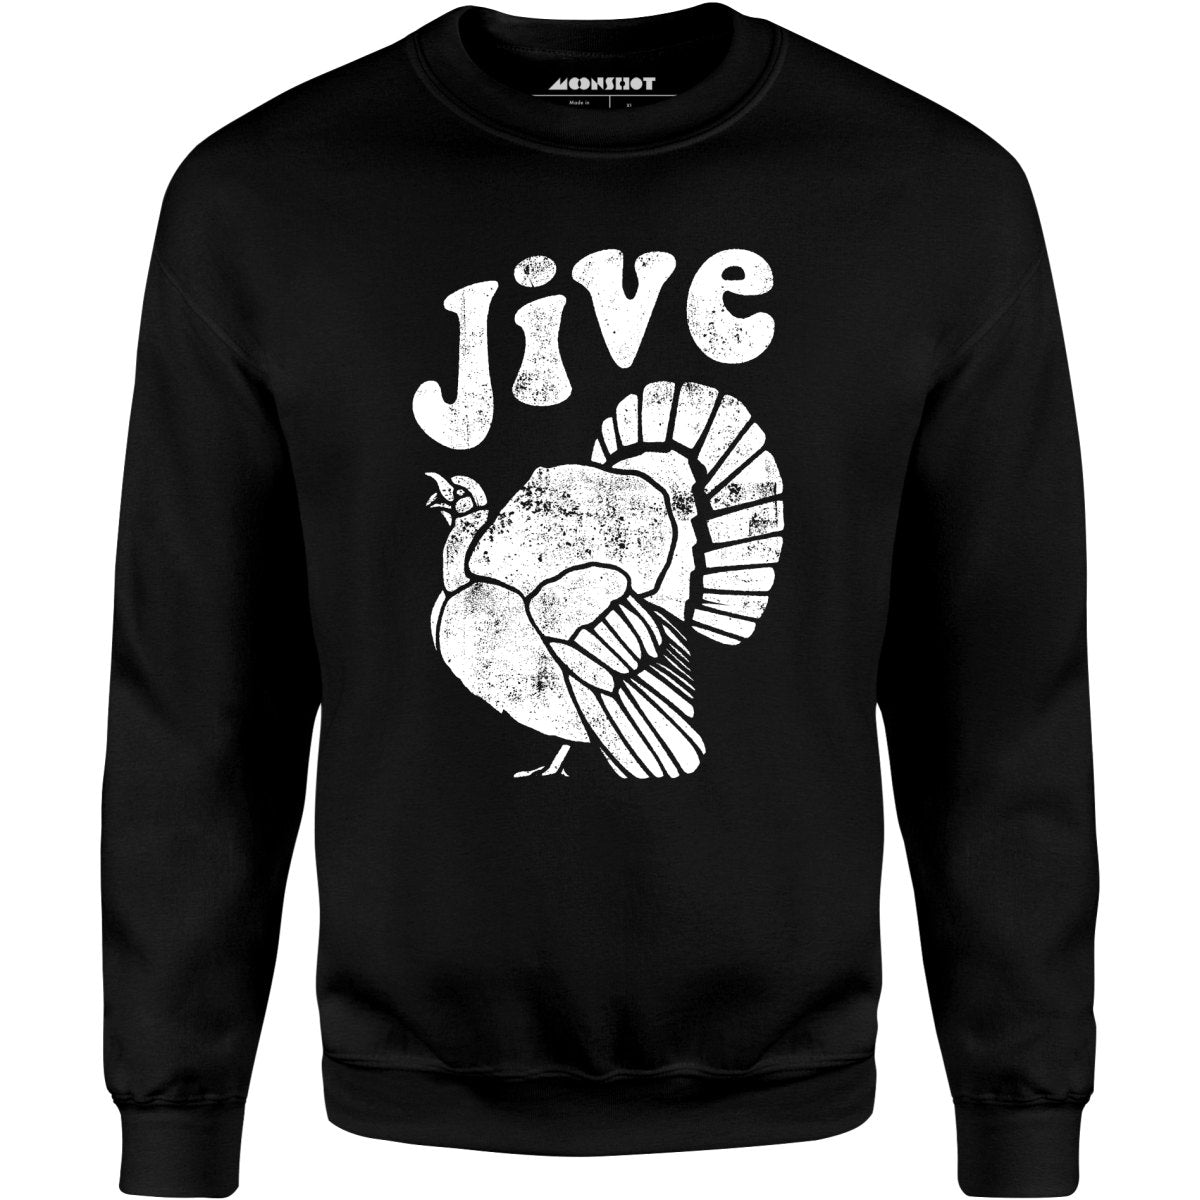 Jive Turkey - Unisex Sweatshirt